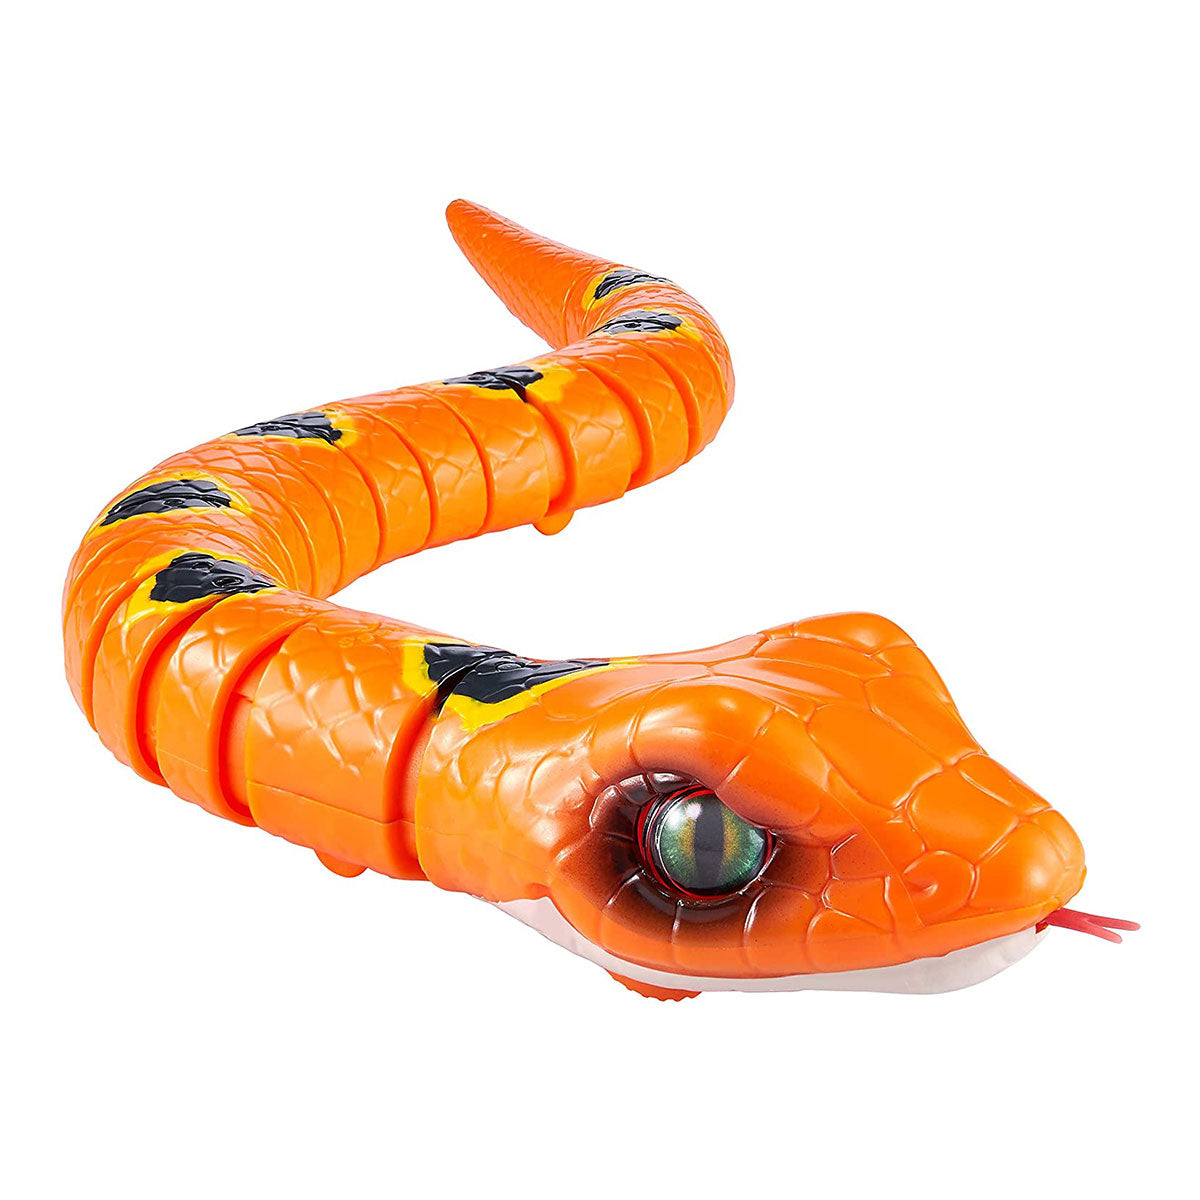 Robo Alive Lizard - Orange by ZURU